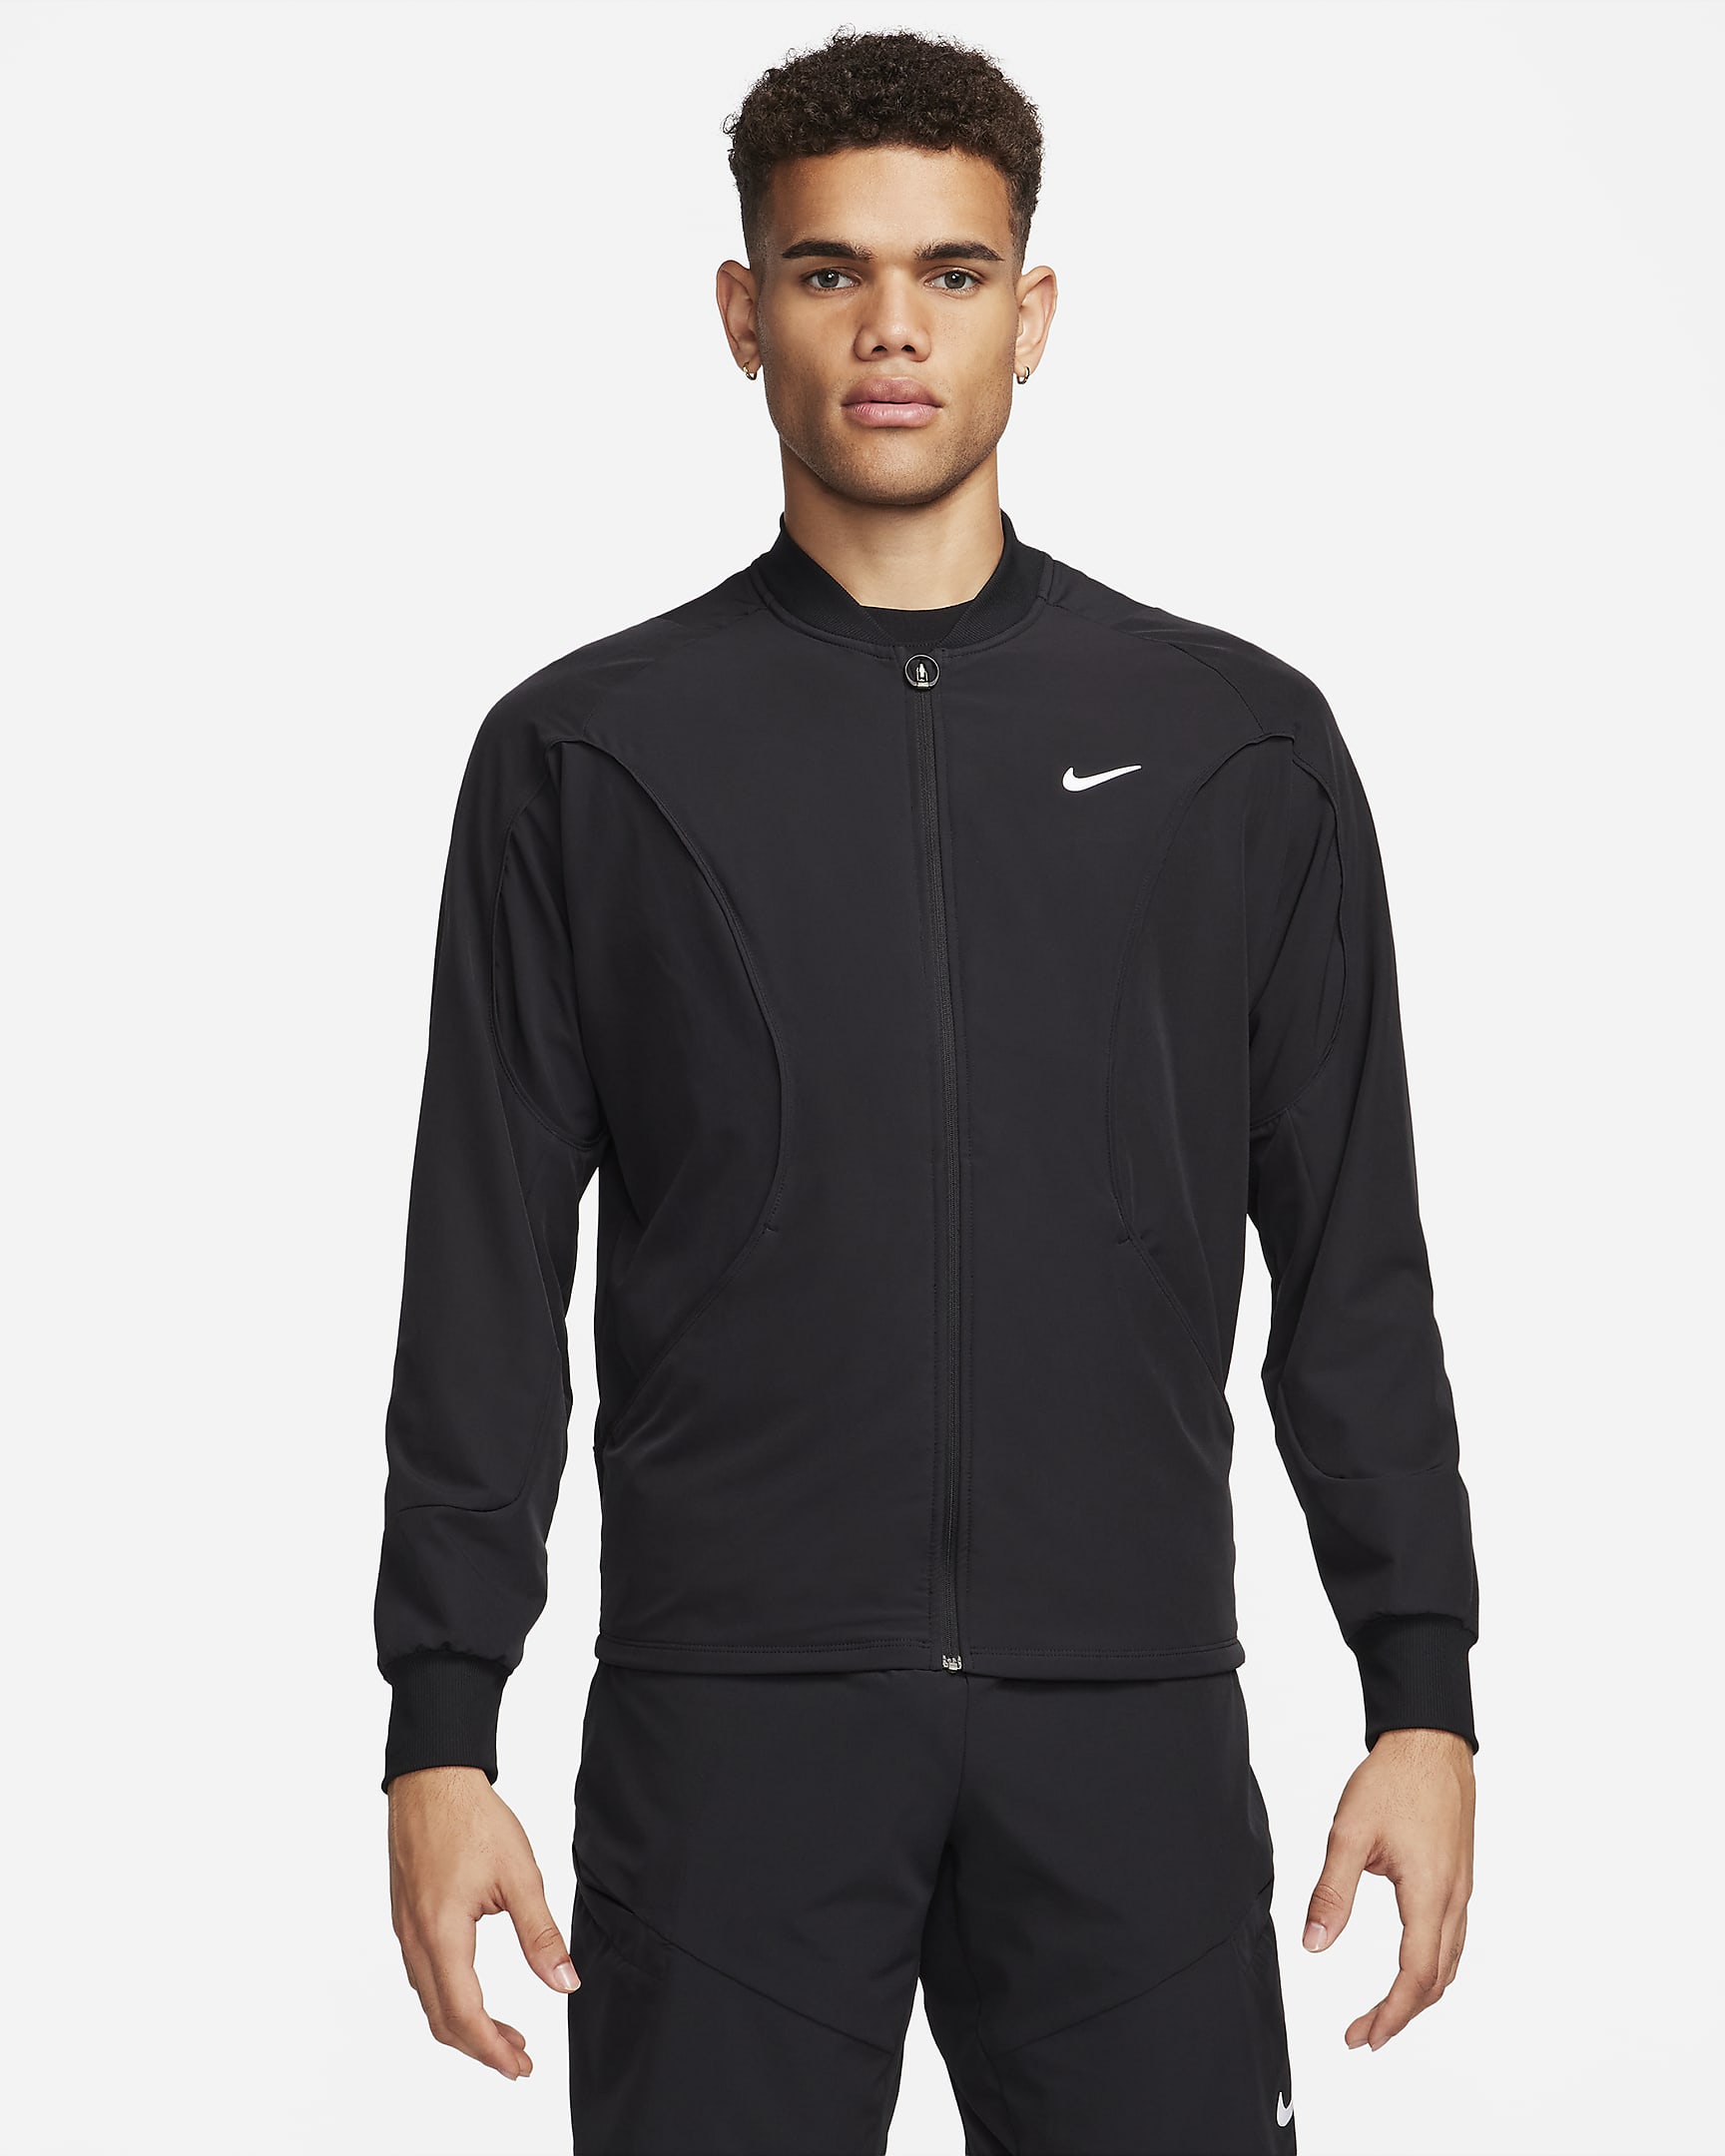 NikeCourt Advantage Men's Jacket - Black/White